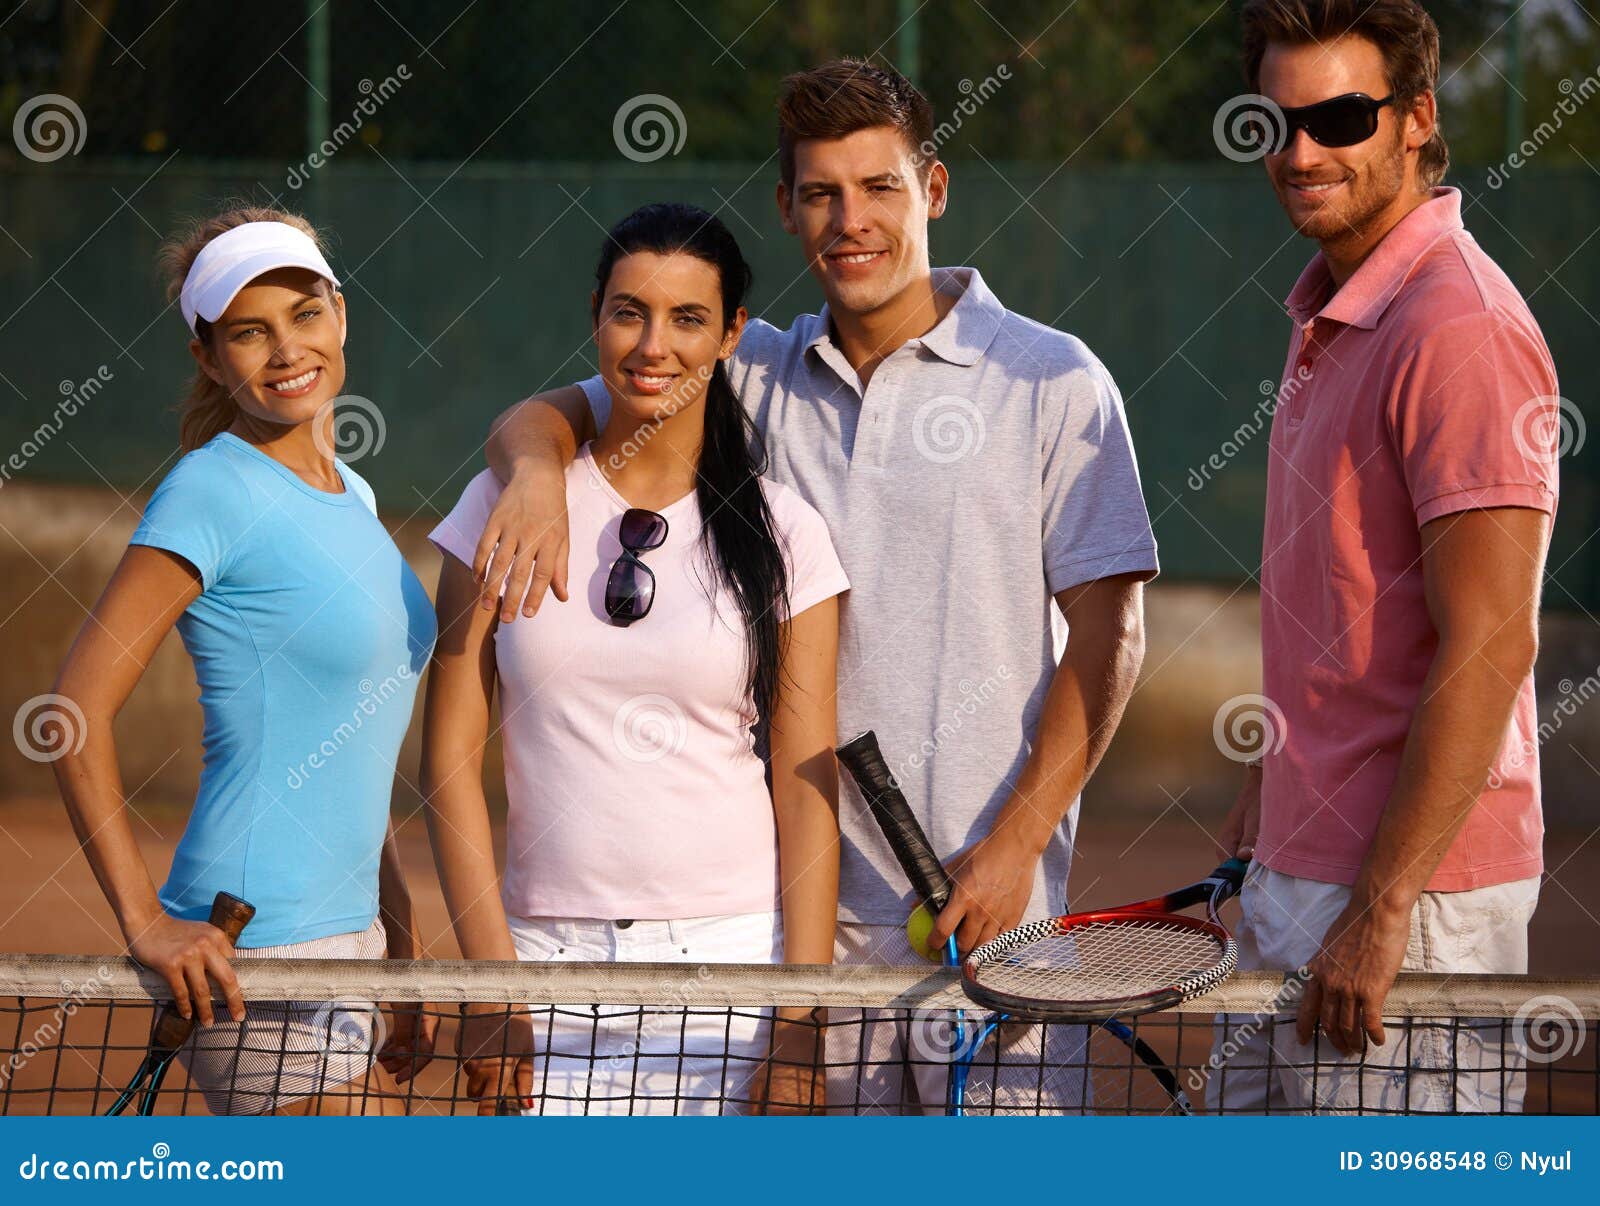 happy companionship on tennis court